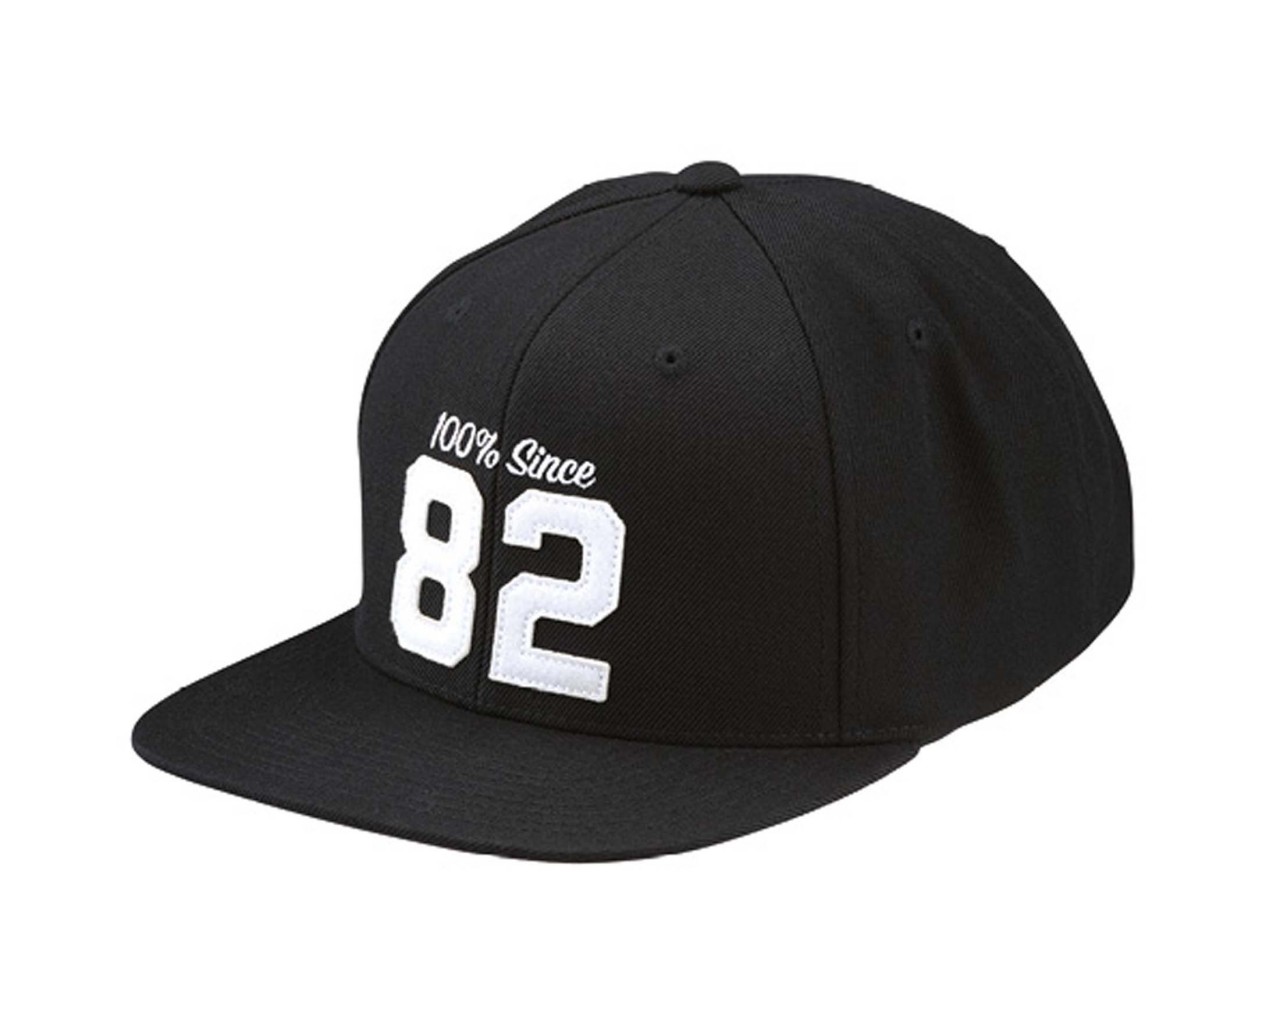 100% Since 82 Snapback Hat | black